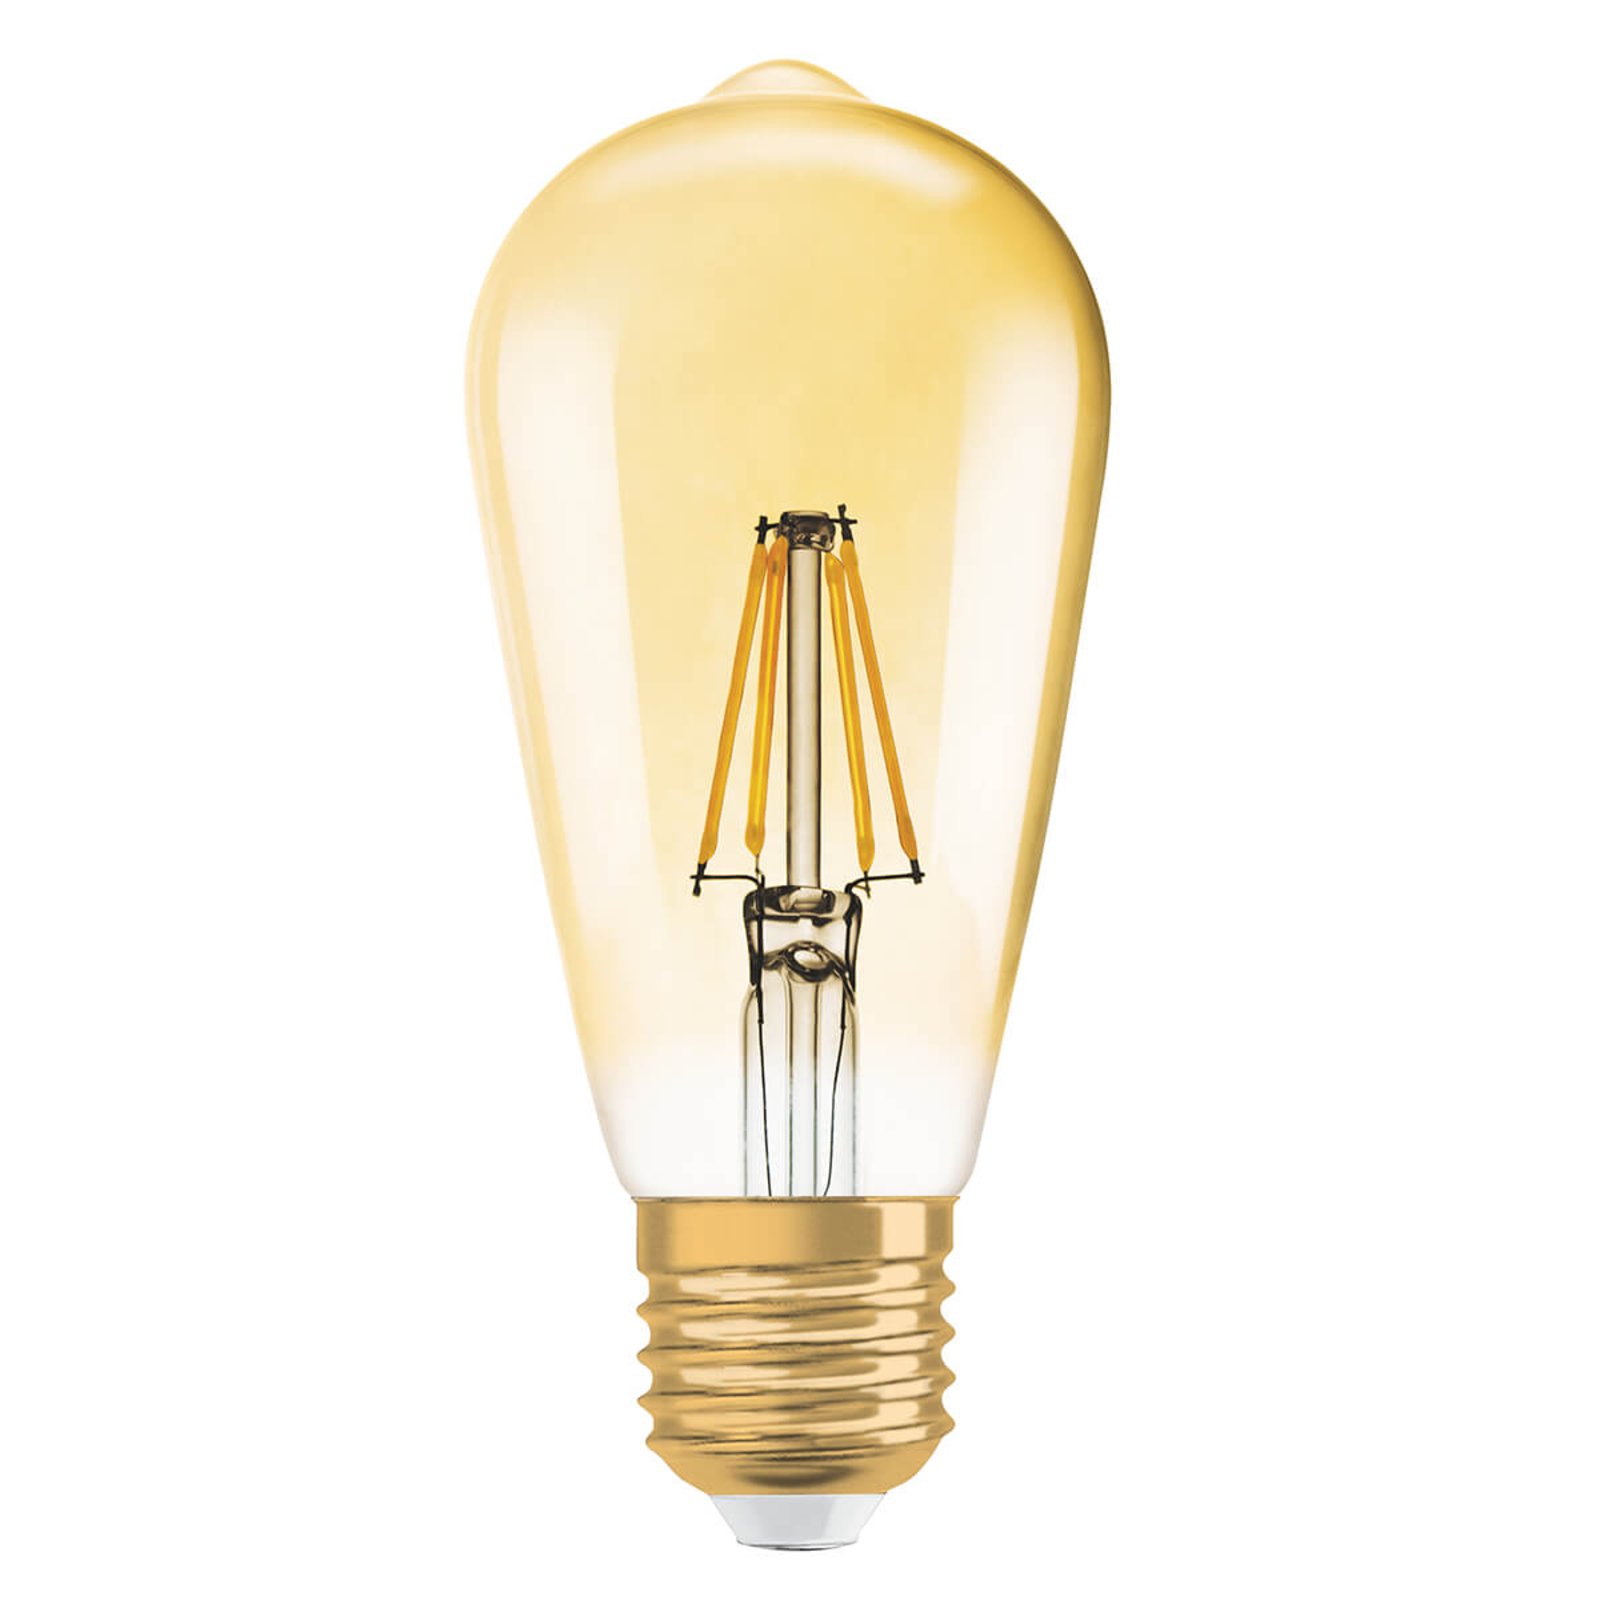 Żarówka LED Gold E27 2,5W ciepła biel, 225 lumenów